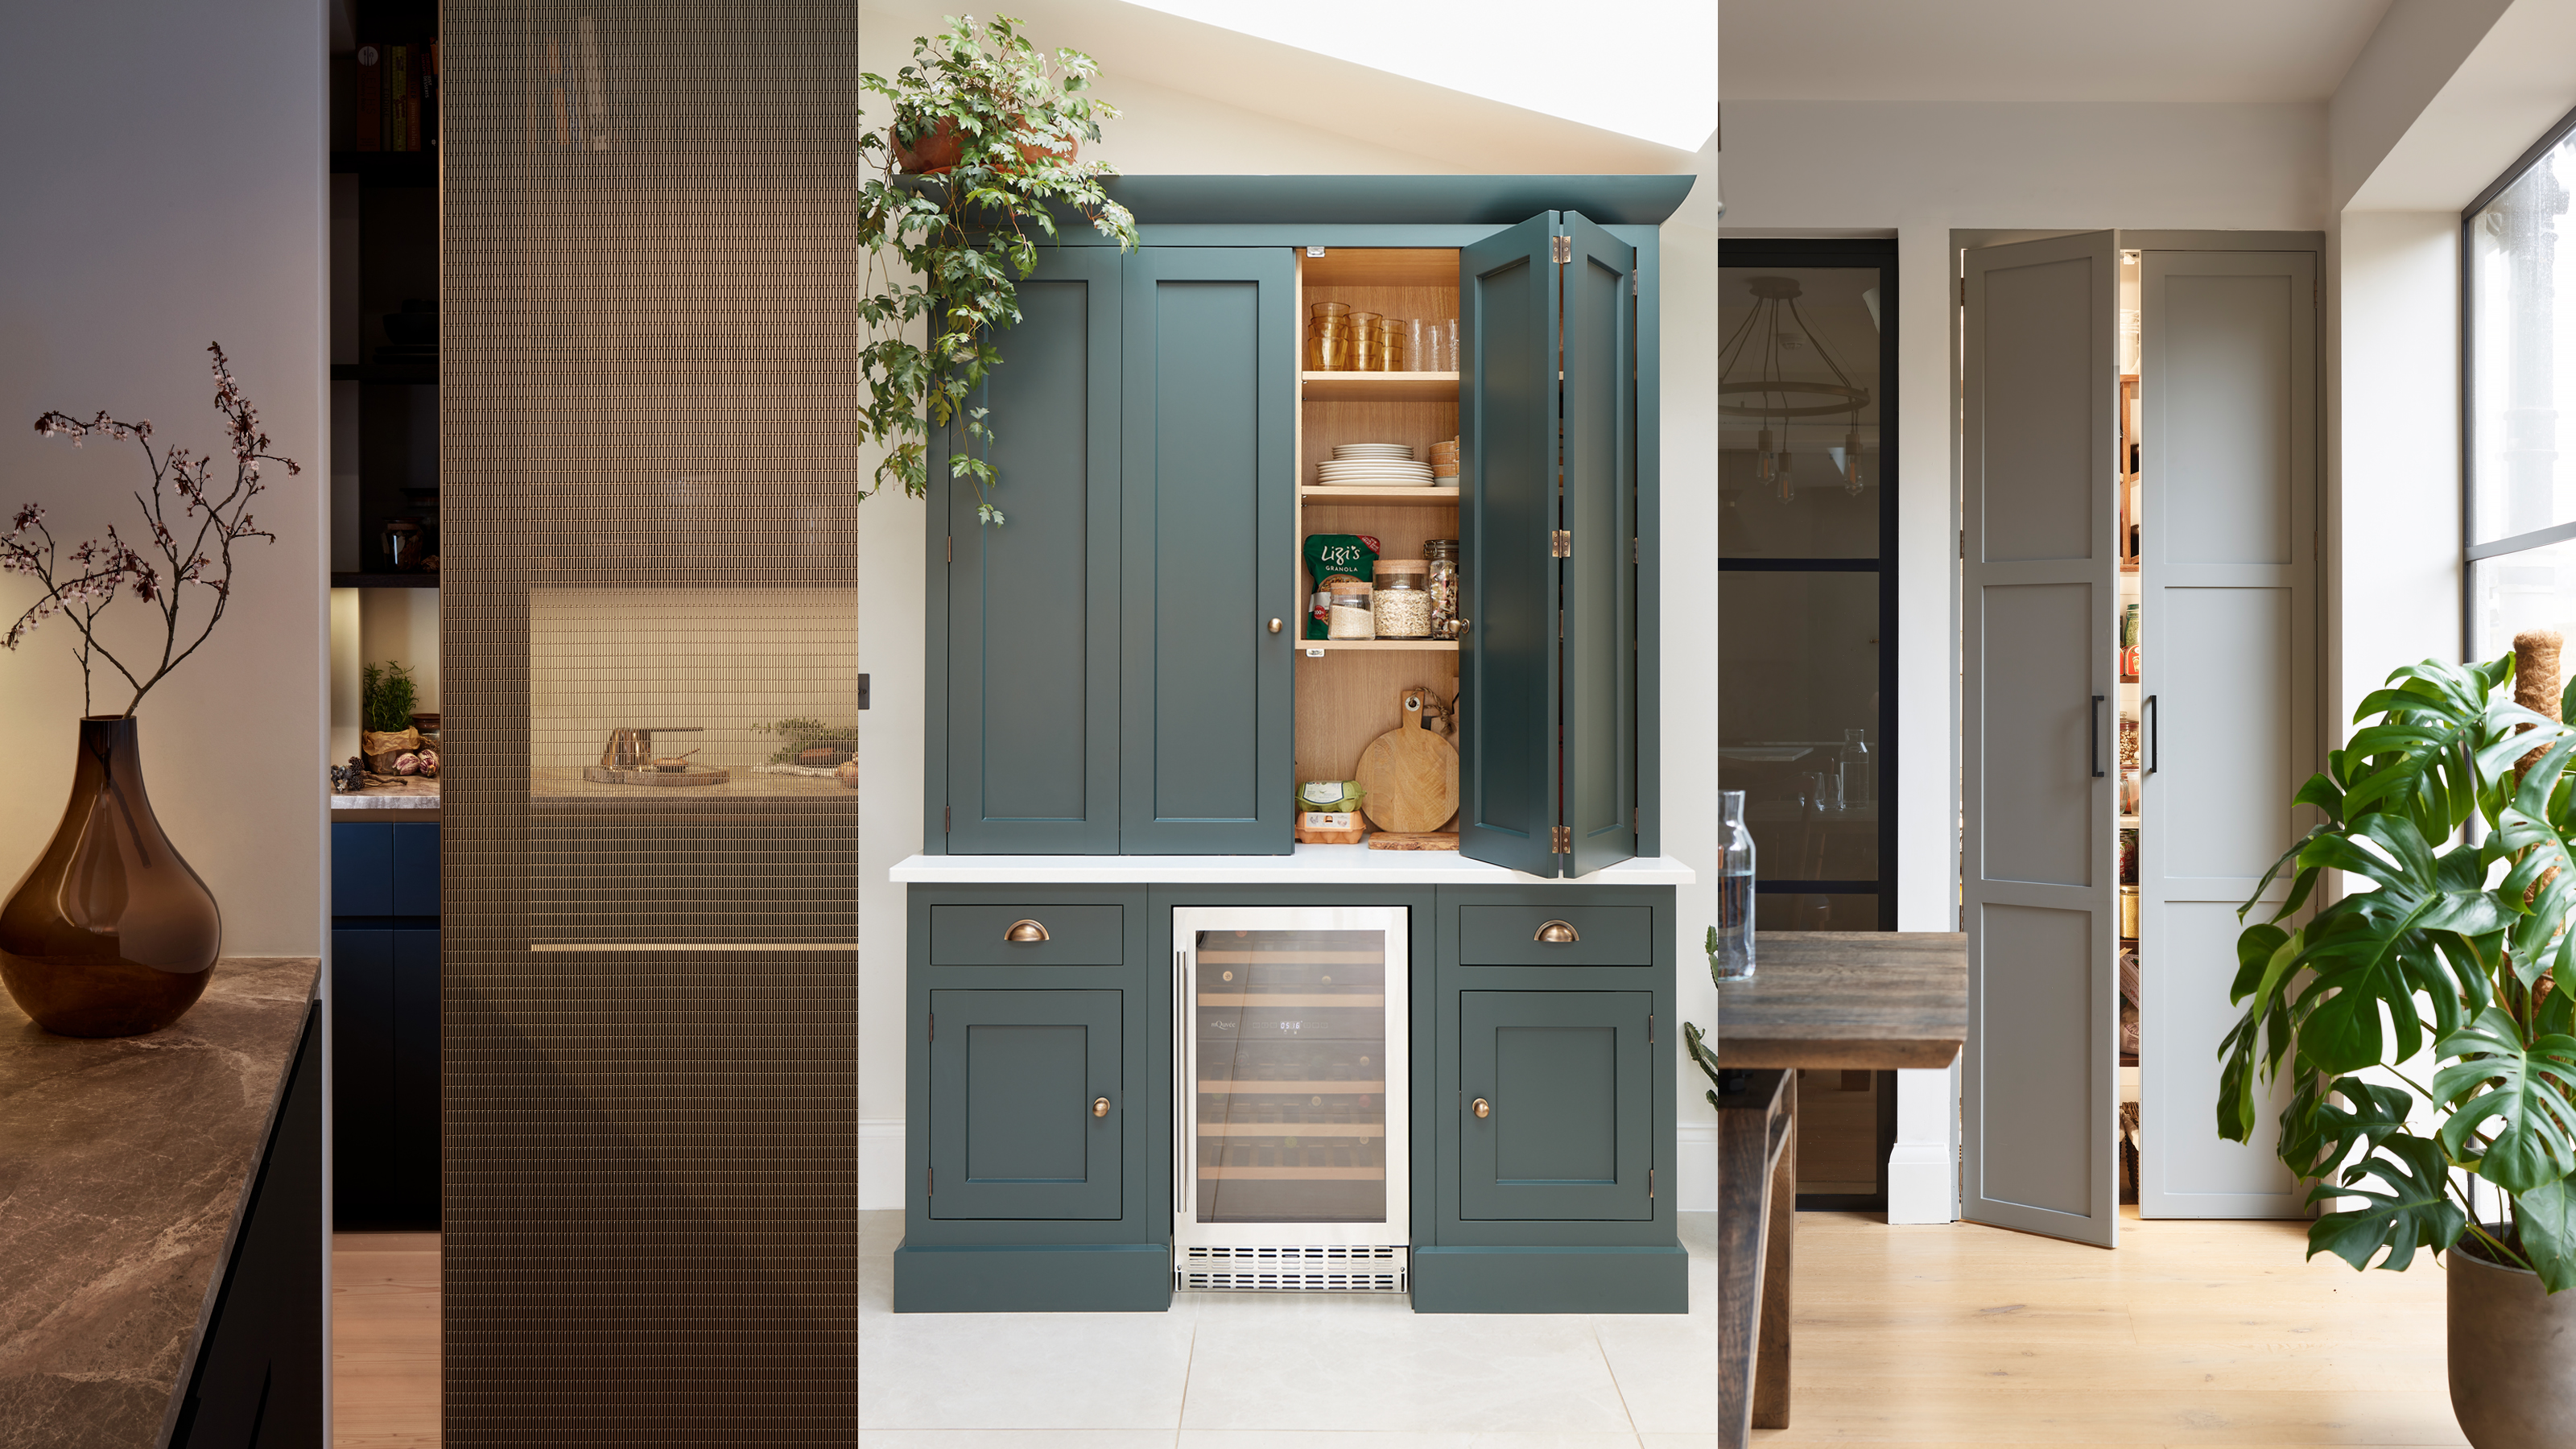 Pantry door ideas – 10 inspiring styles to make your kitchen storage shine